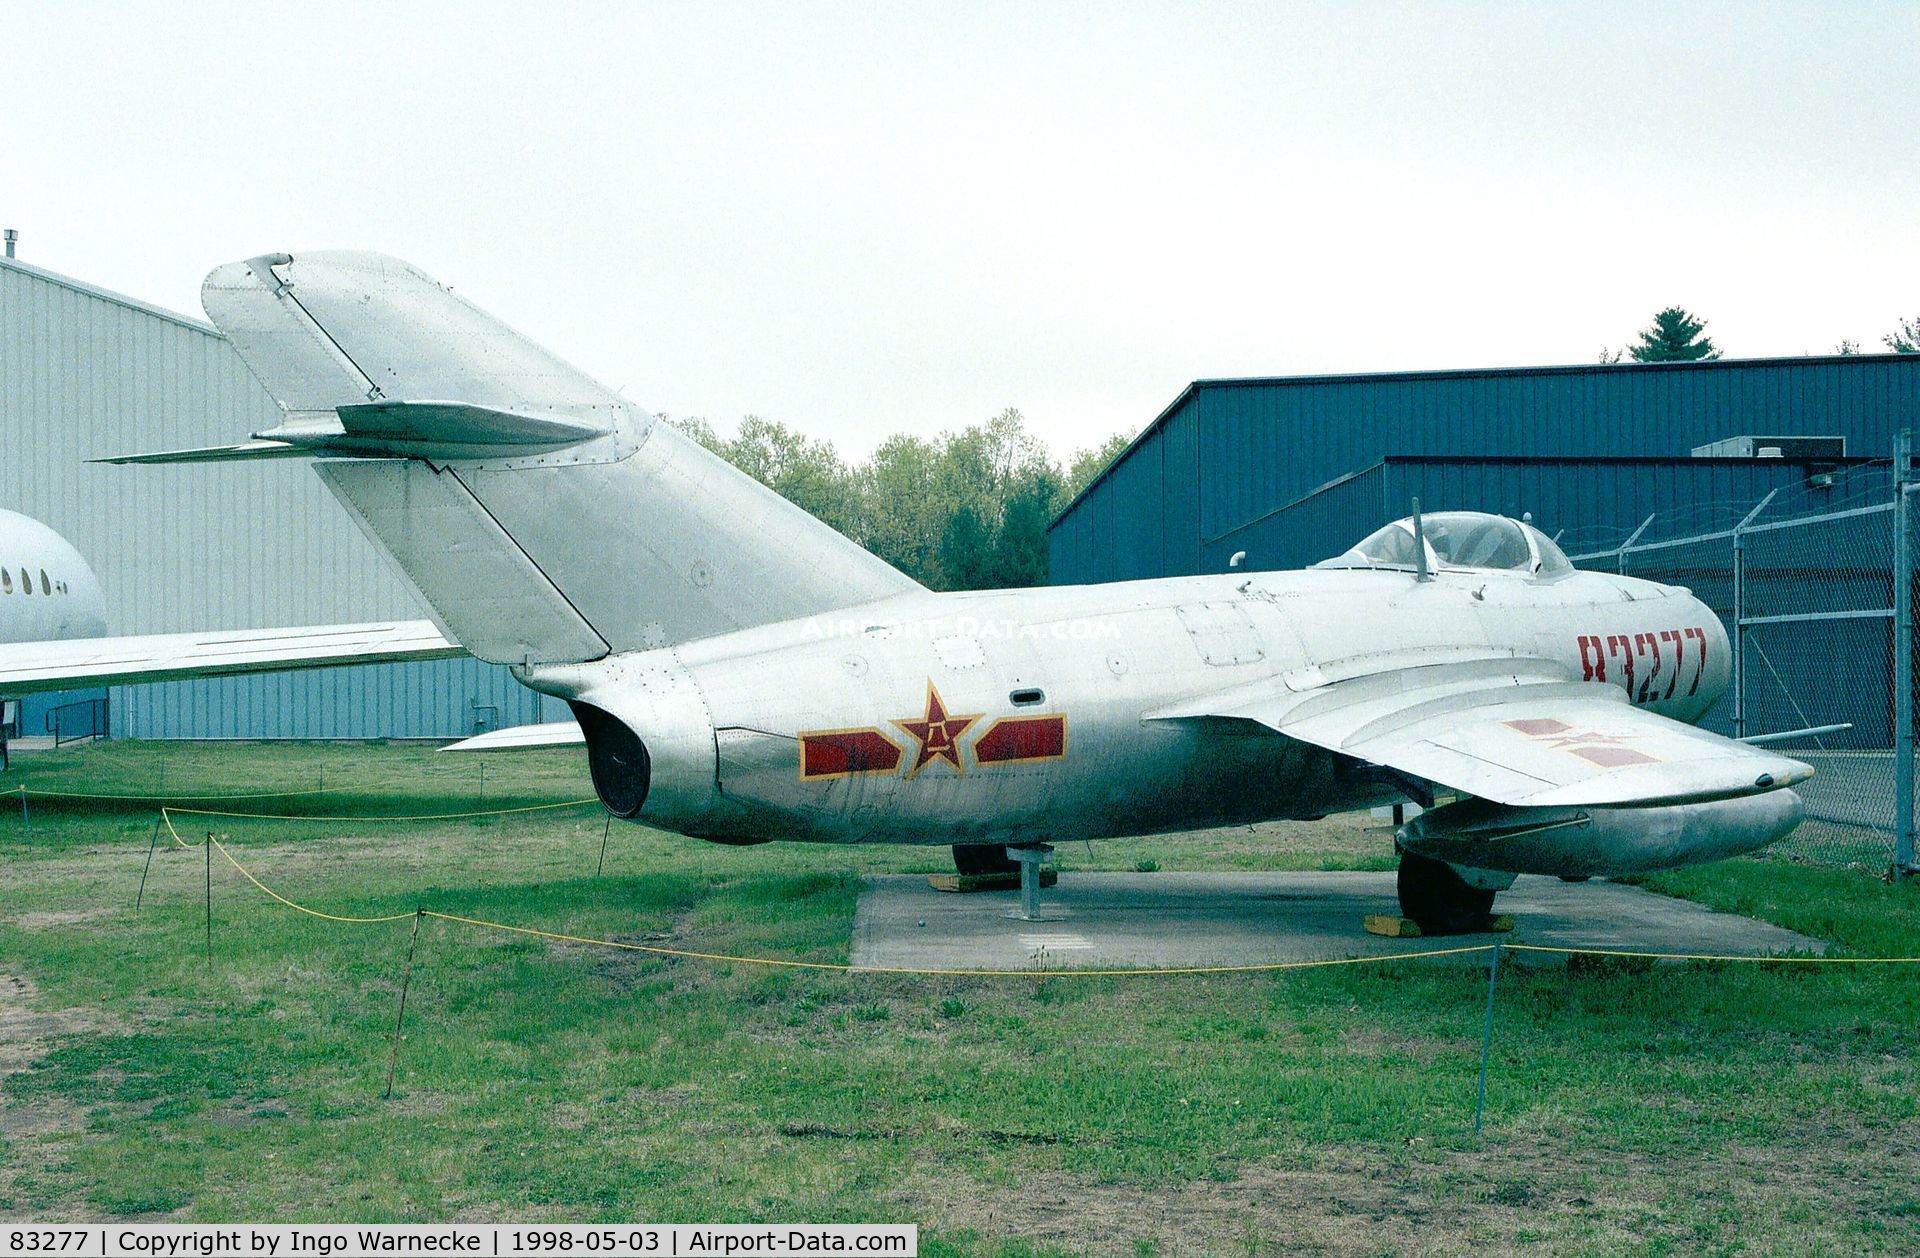 83277, Mikoyan-Gurevich MiG-15 C/N 83277, Mikoyan i Gurevich MiG-15 FAGOT at the New England Air Museum, Windsor Locks CT